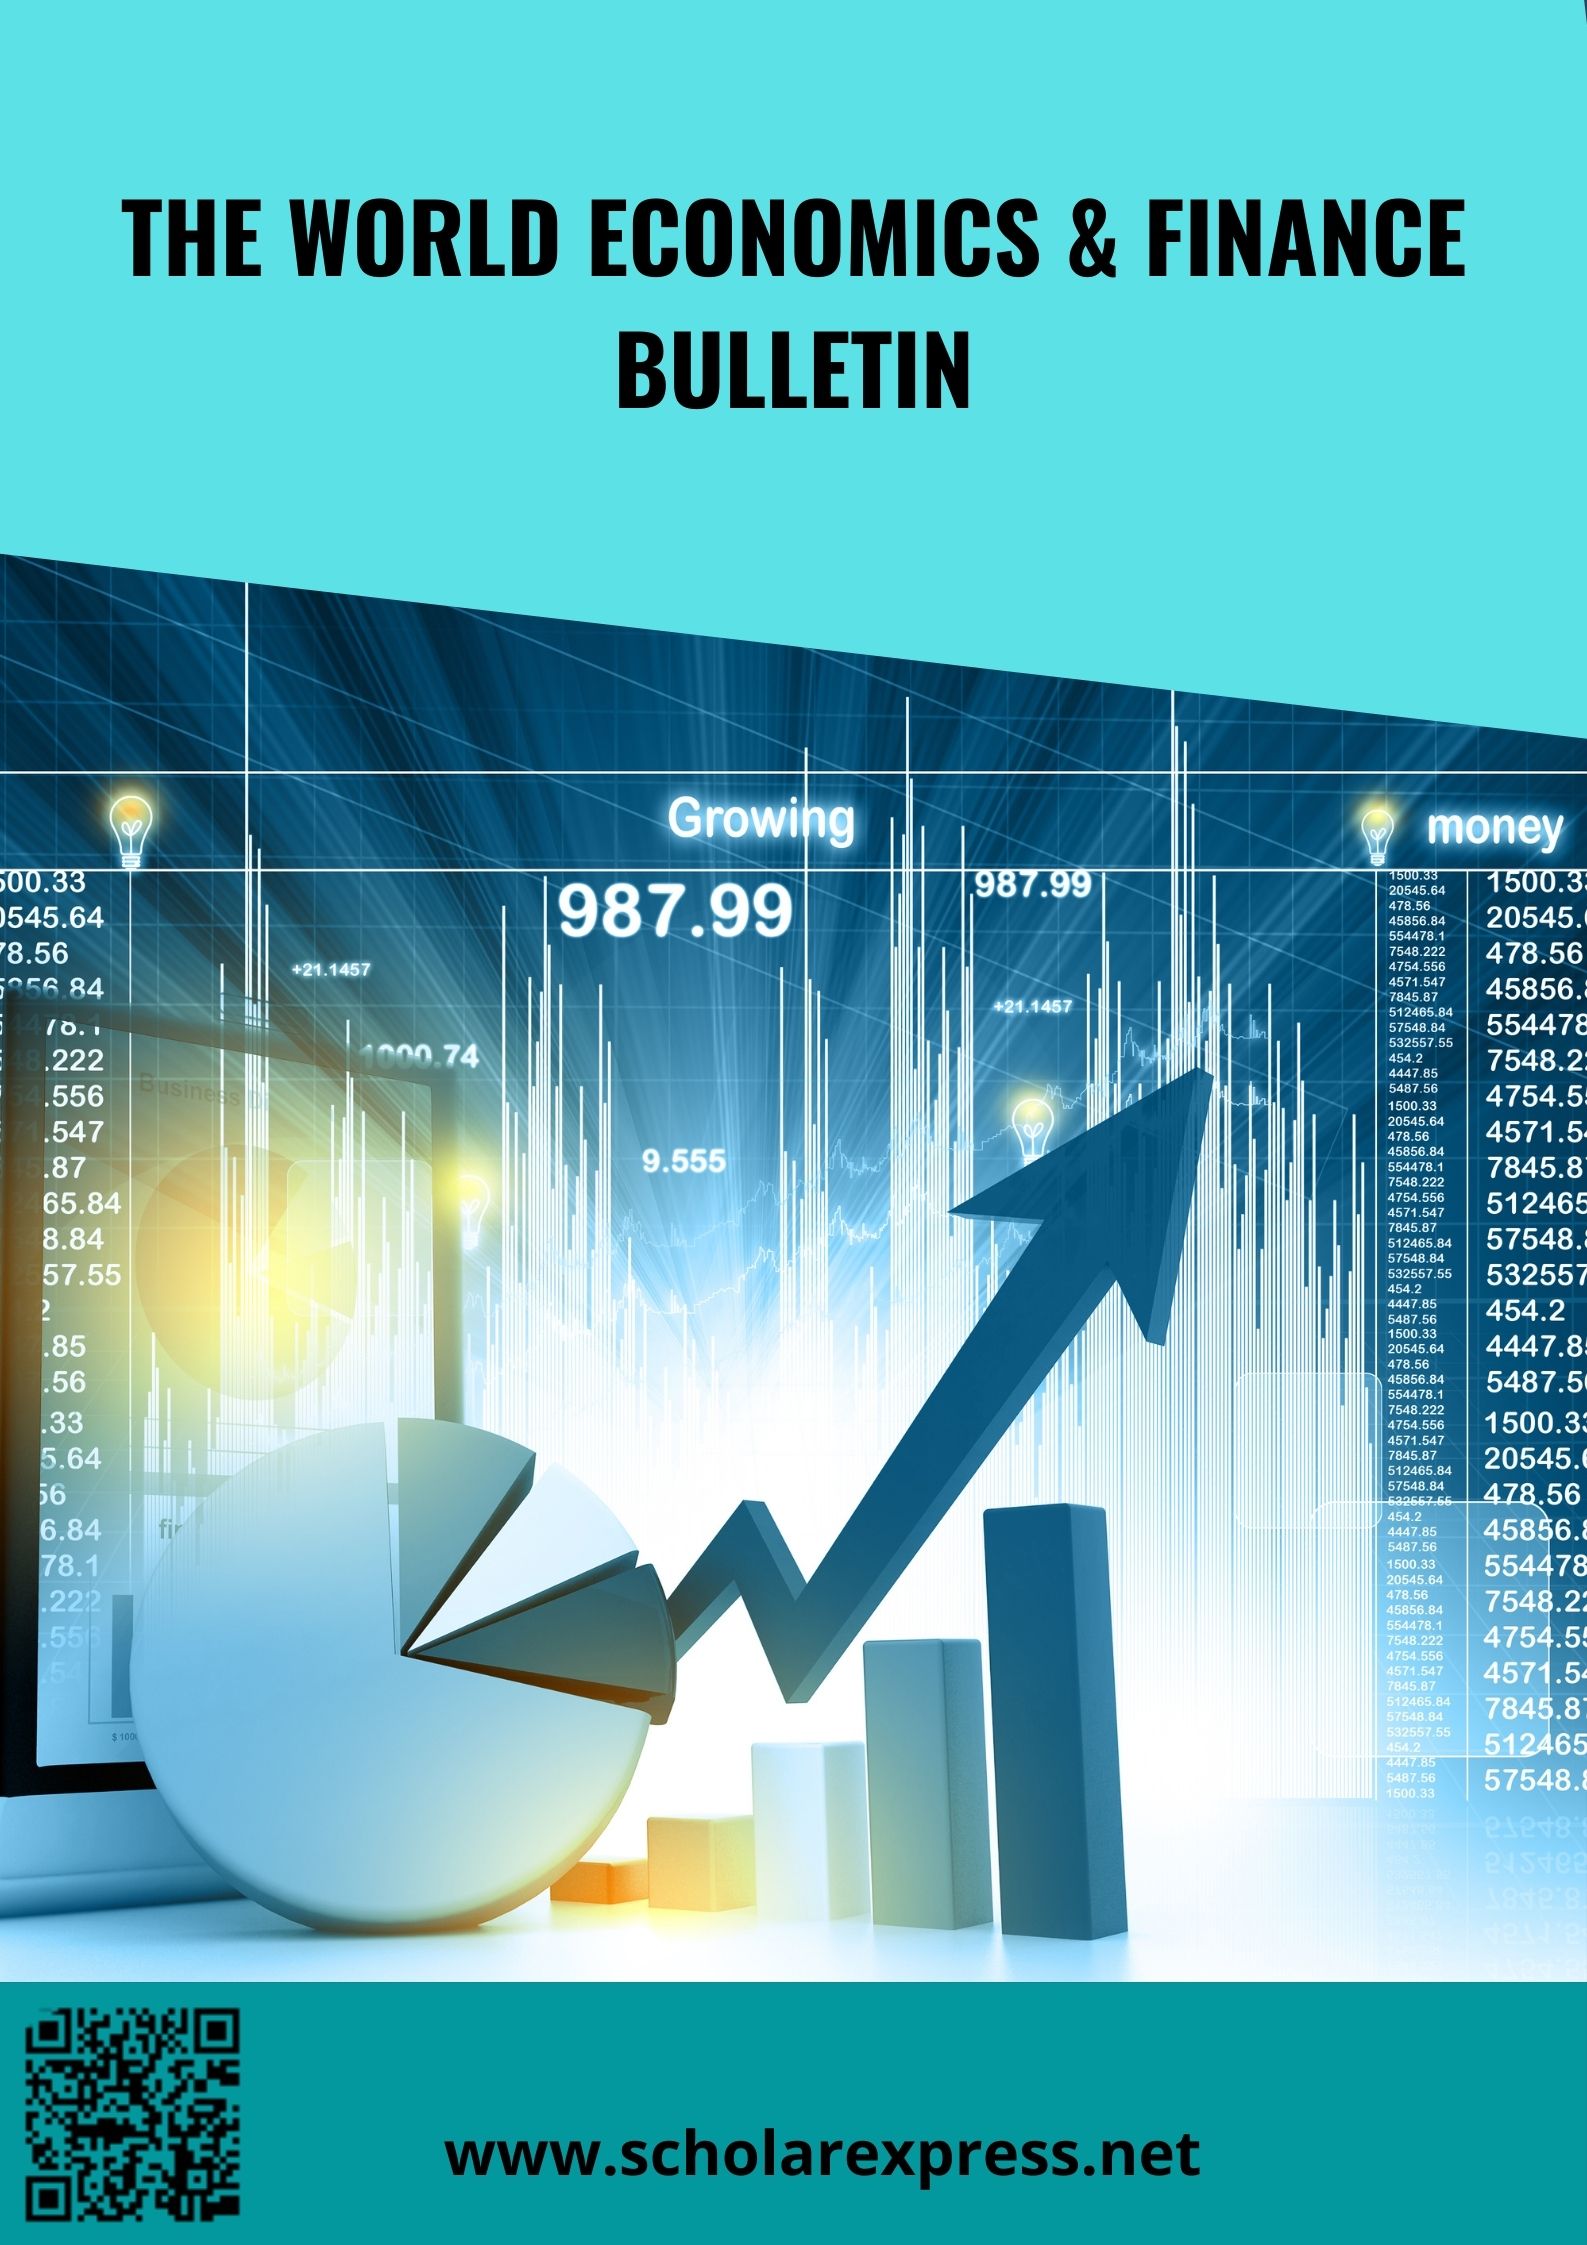 The World Economics & Finance Bulletin